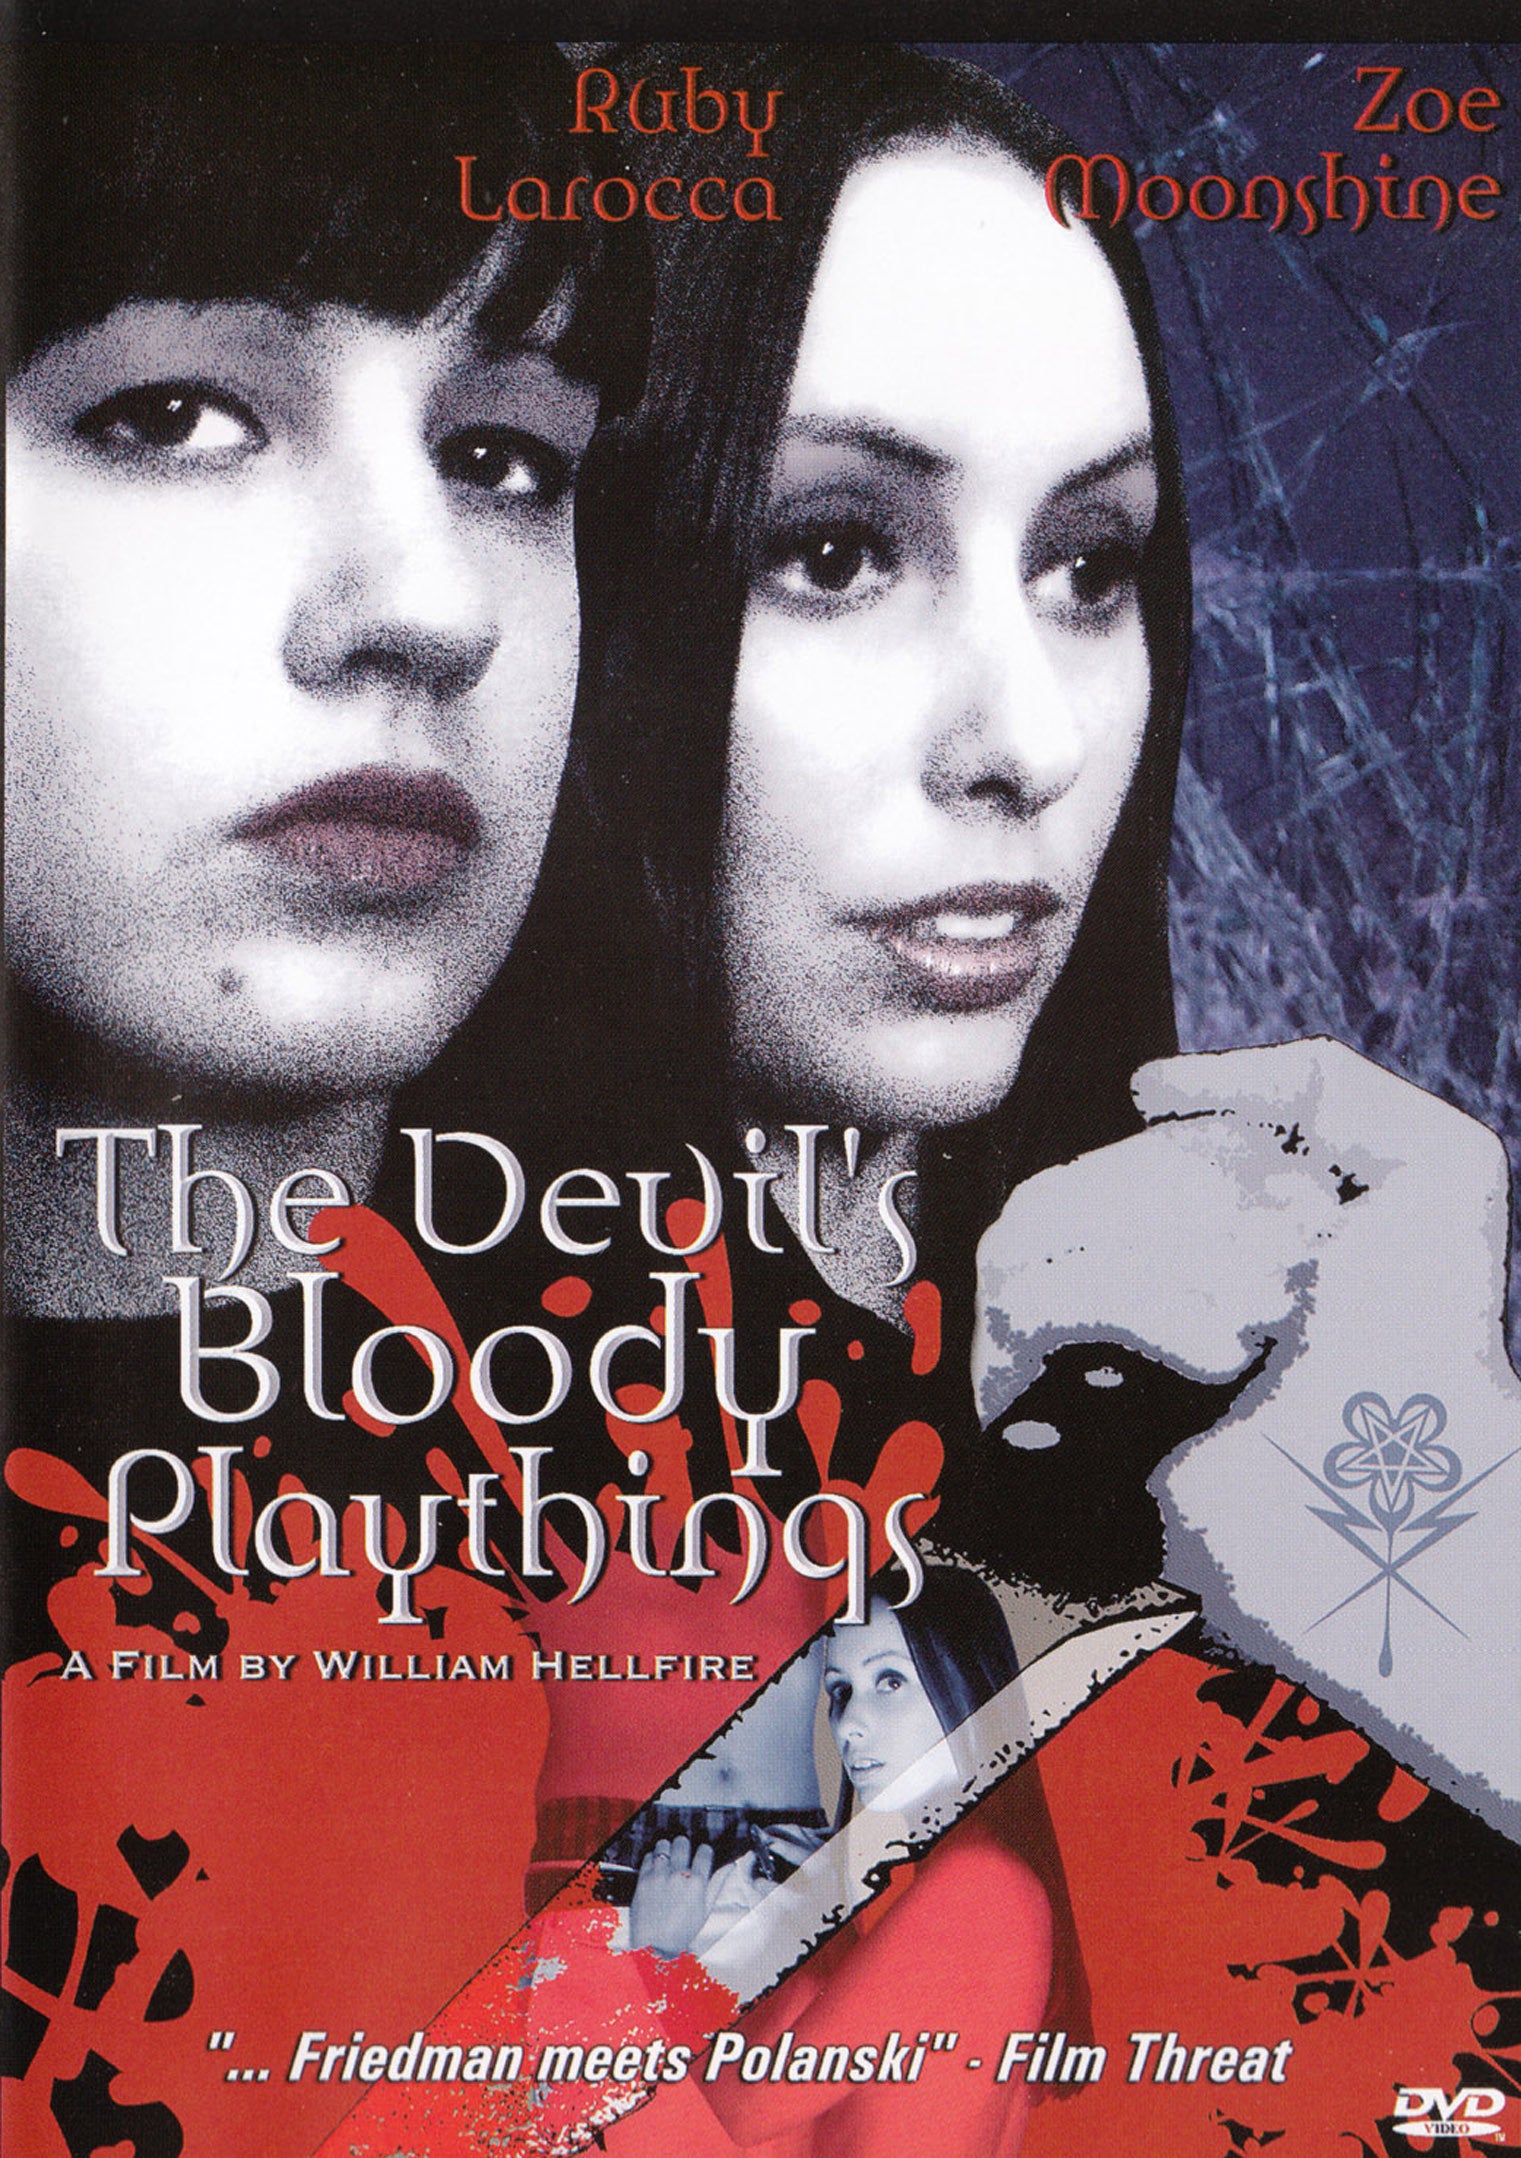 THE DEVIL'S BLOODY PLAYTHINGS DVD